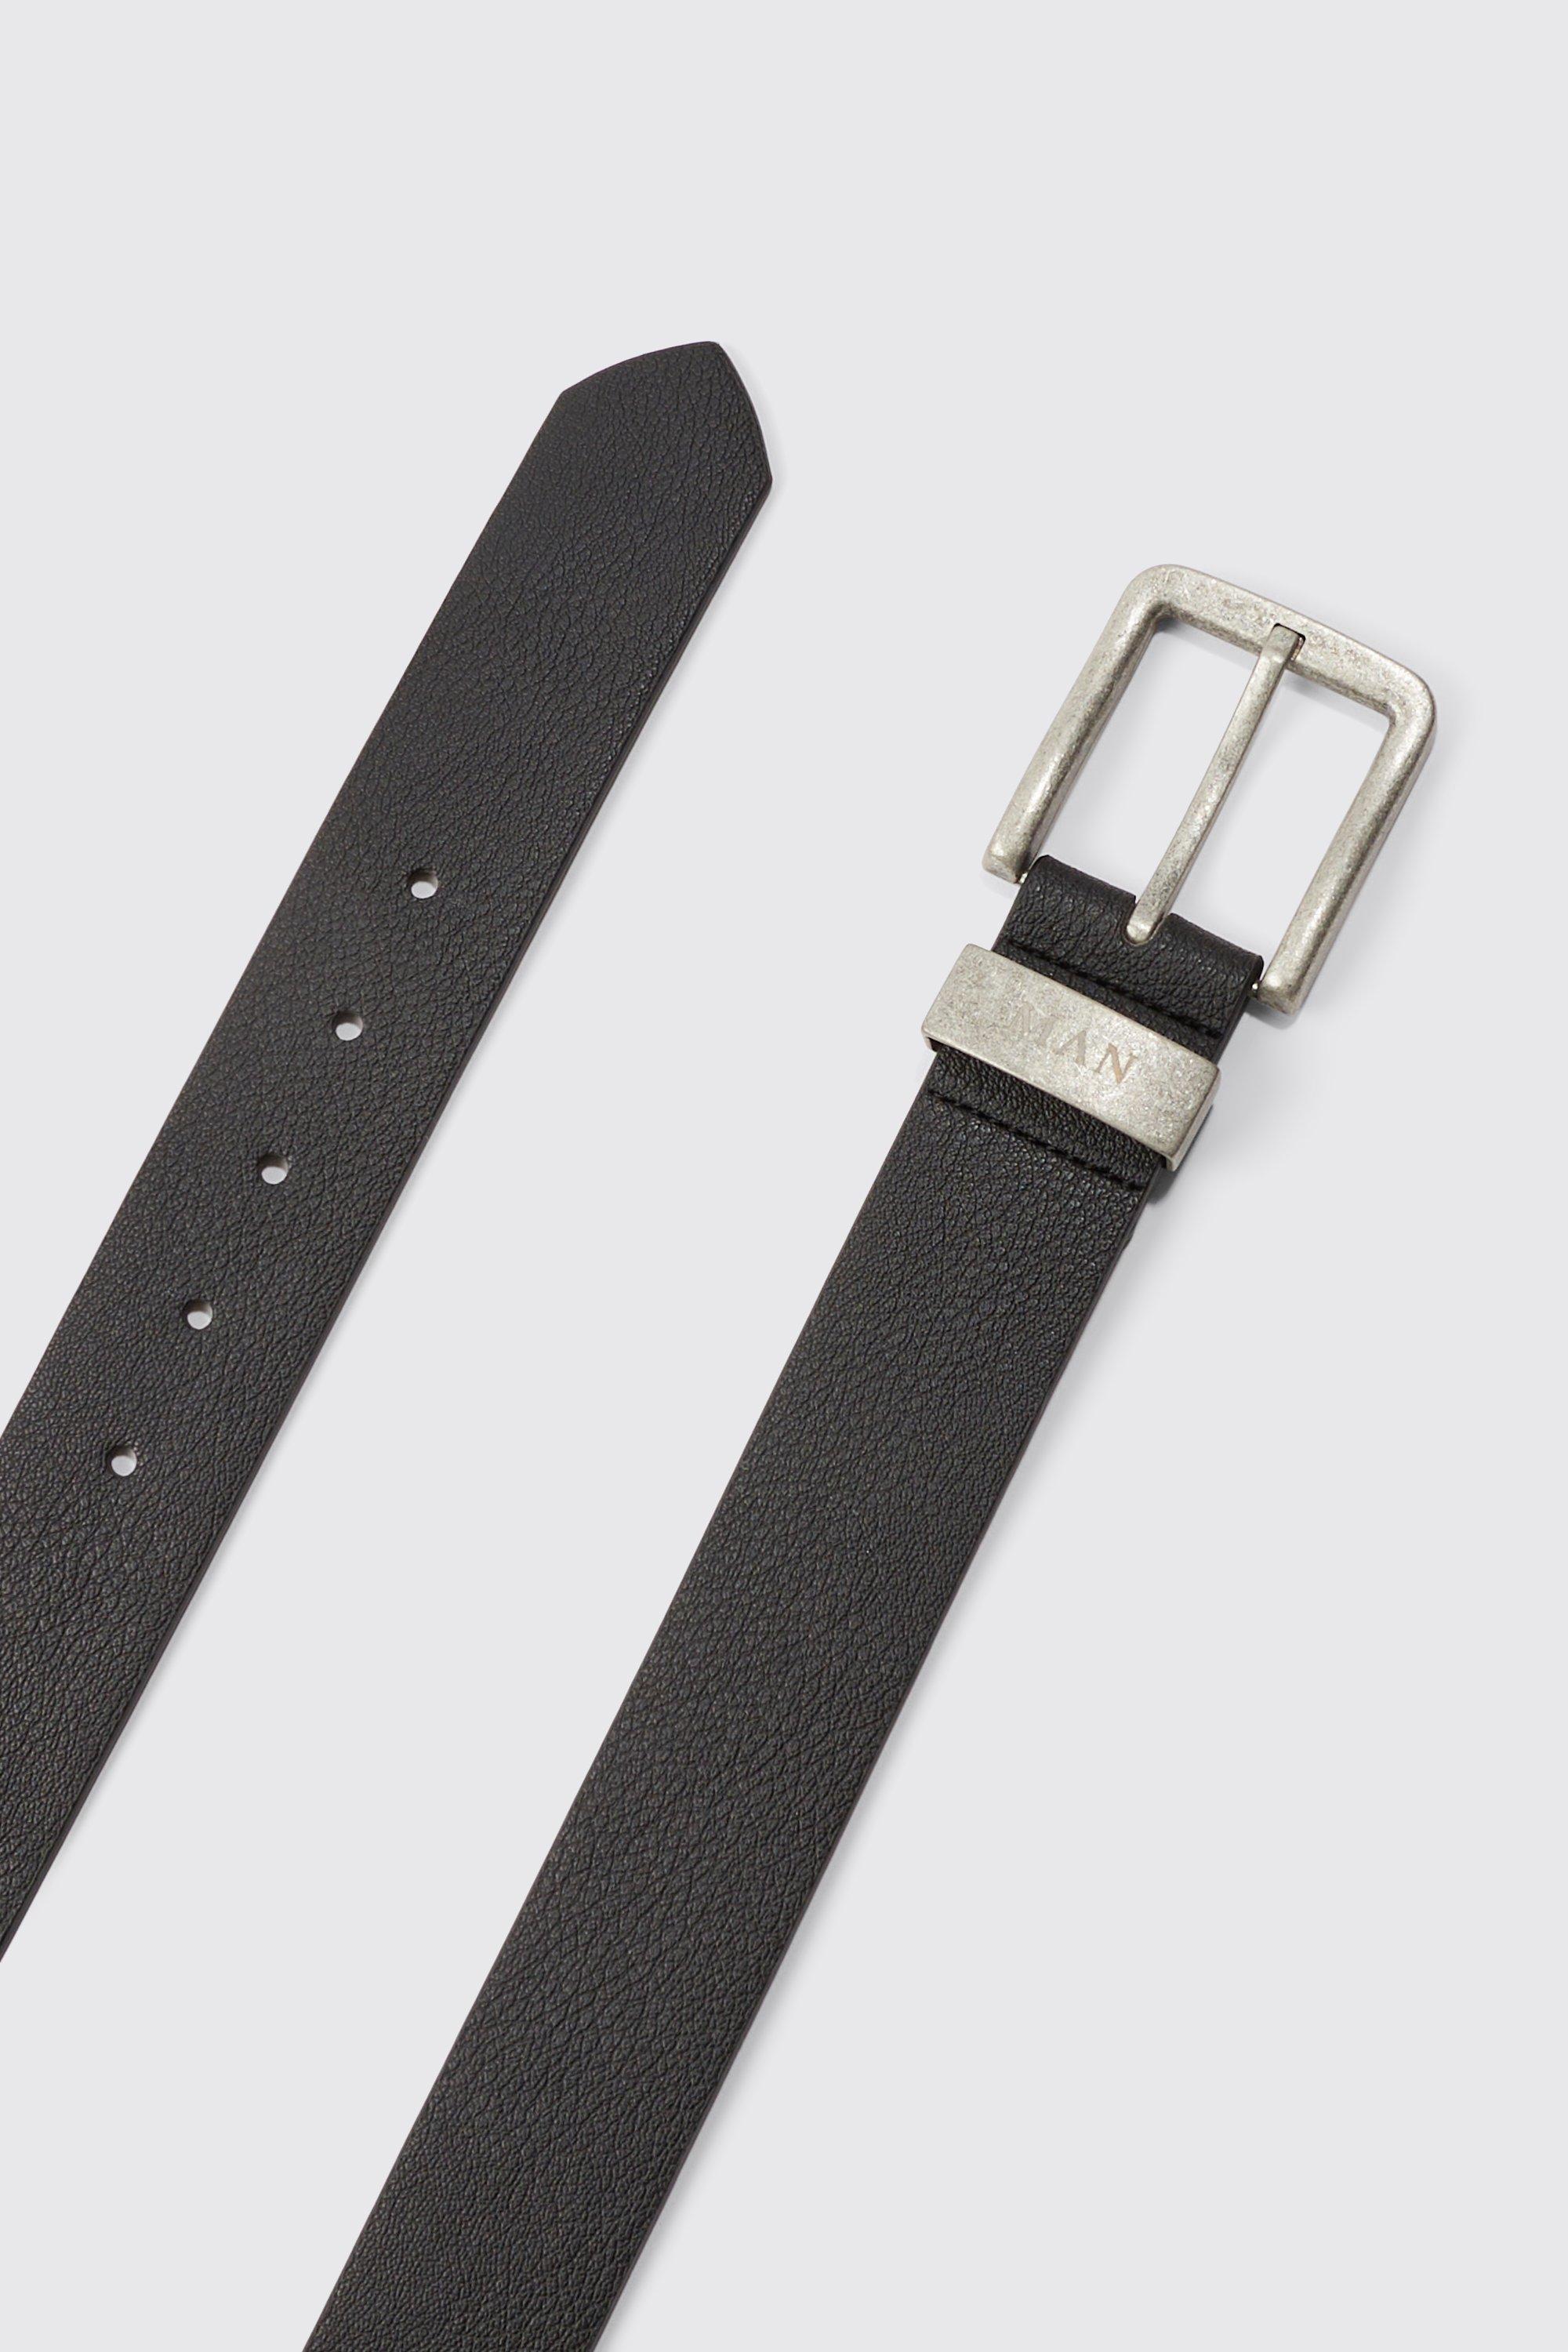 Zara - Leather Belt - Black - Men